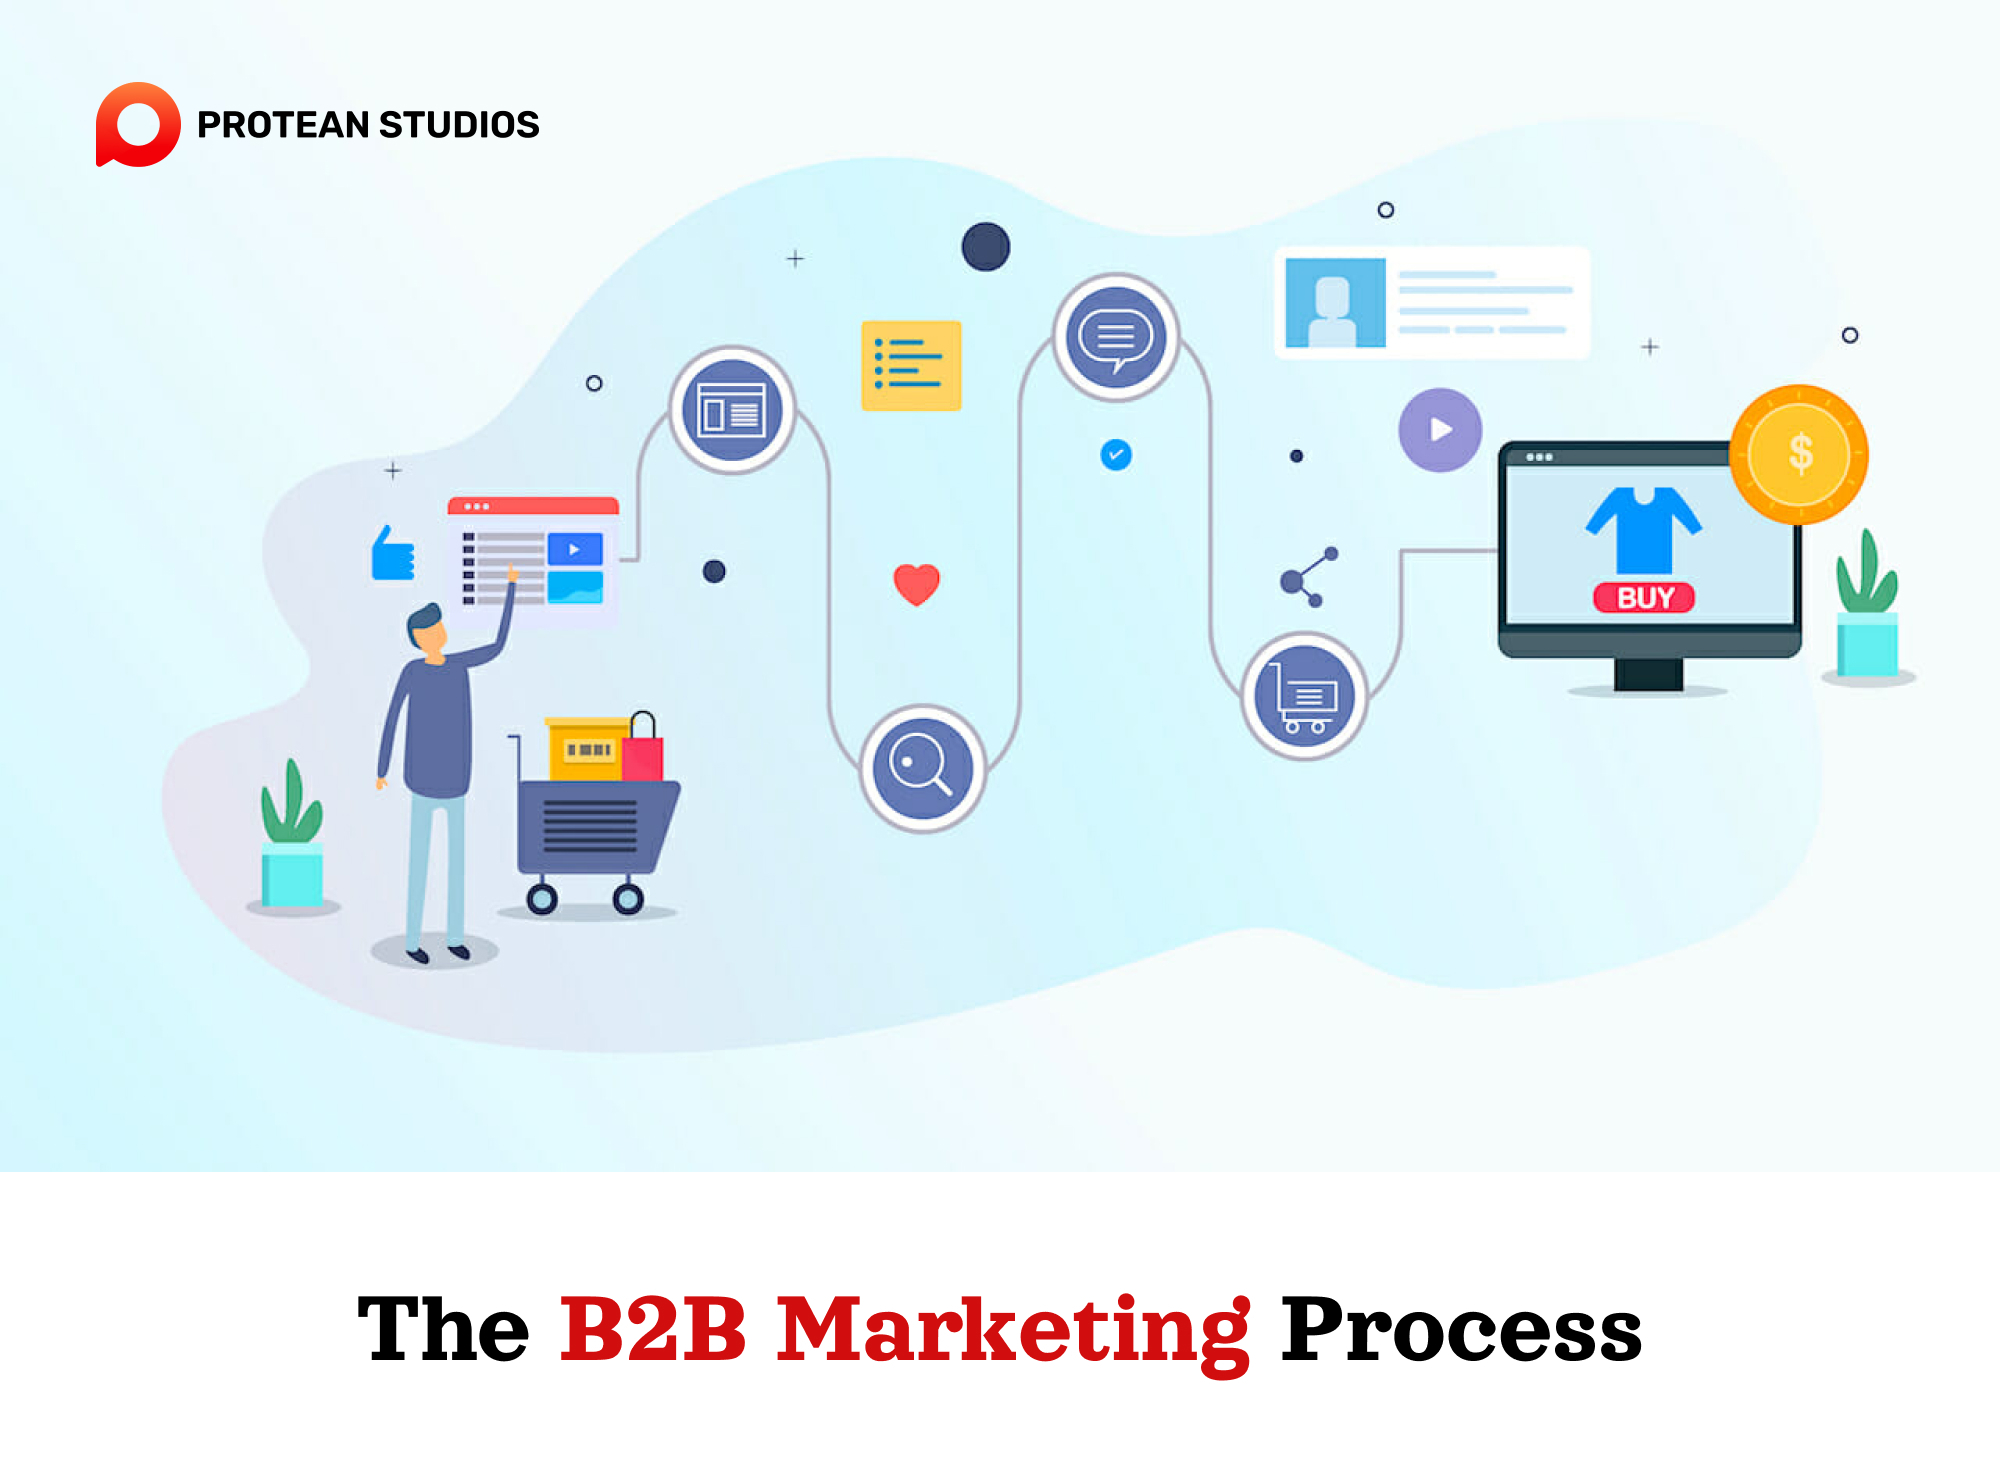 The B2B customer journey